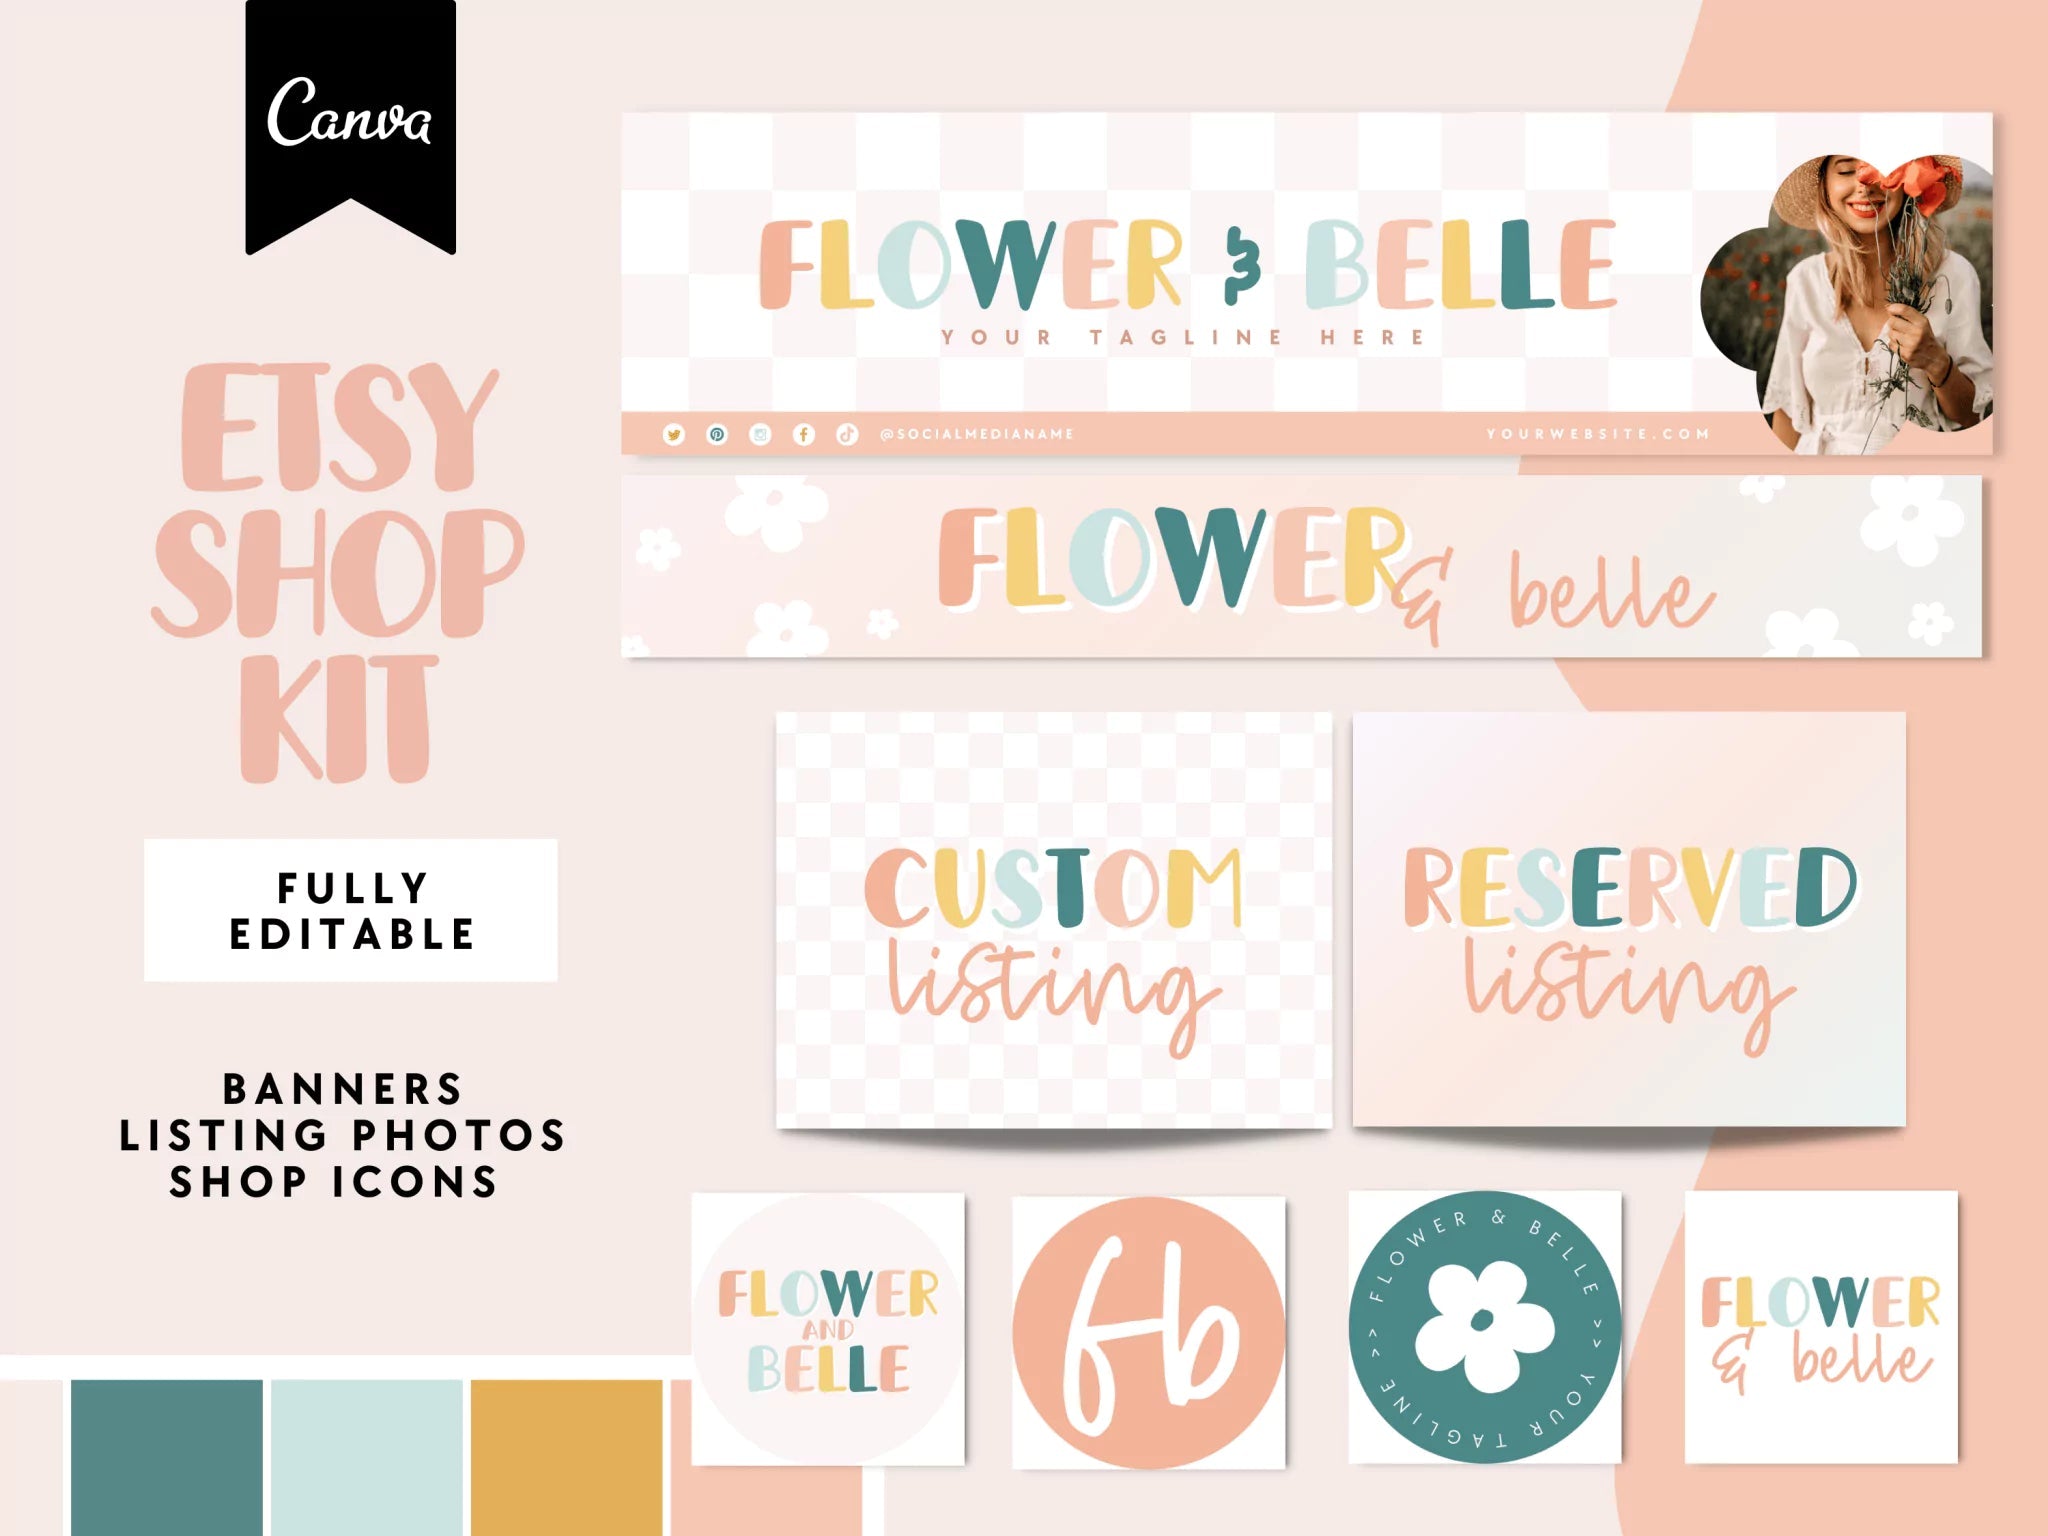 Pastel Rainbow Etsy Shop Kit Canva Template | Etsy Banner, Listing Photos, Icon | Cali - Trendy Fox Studio